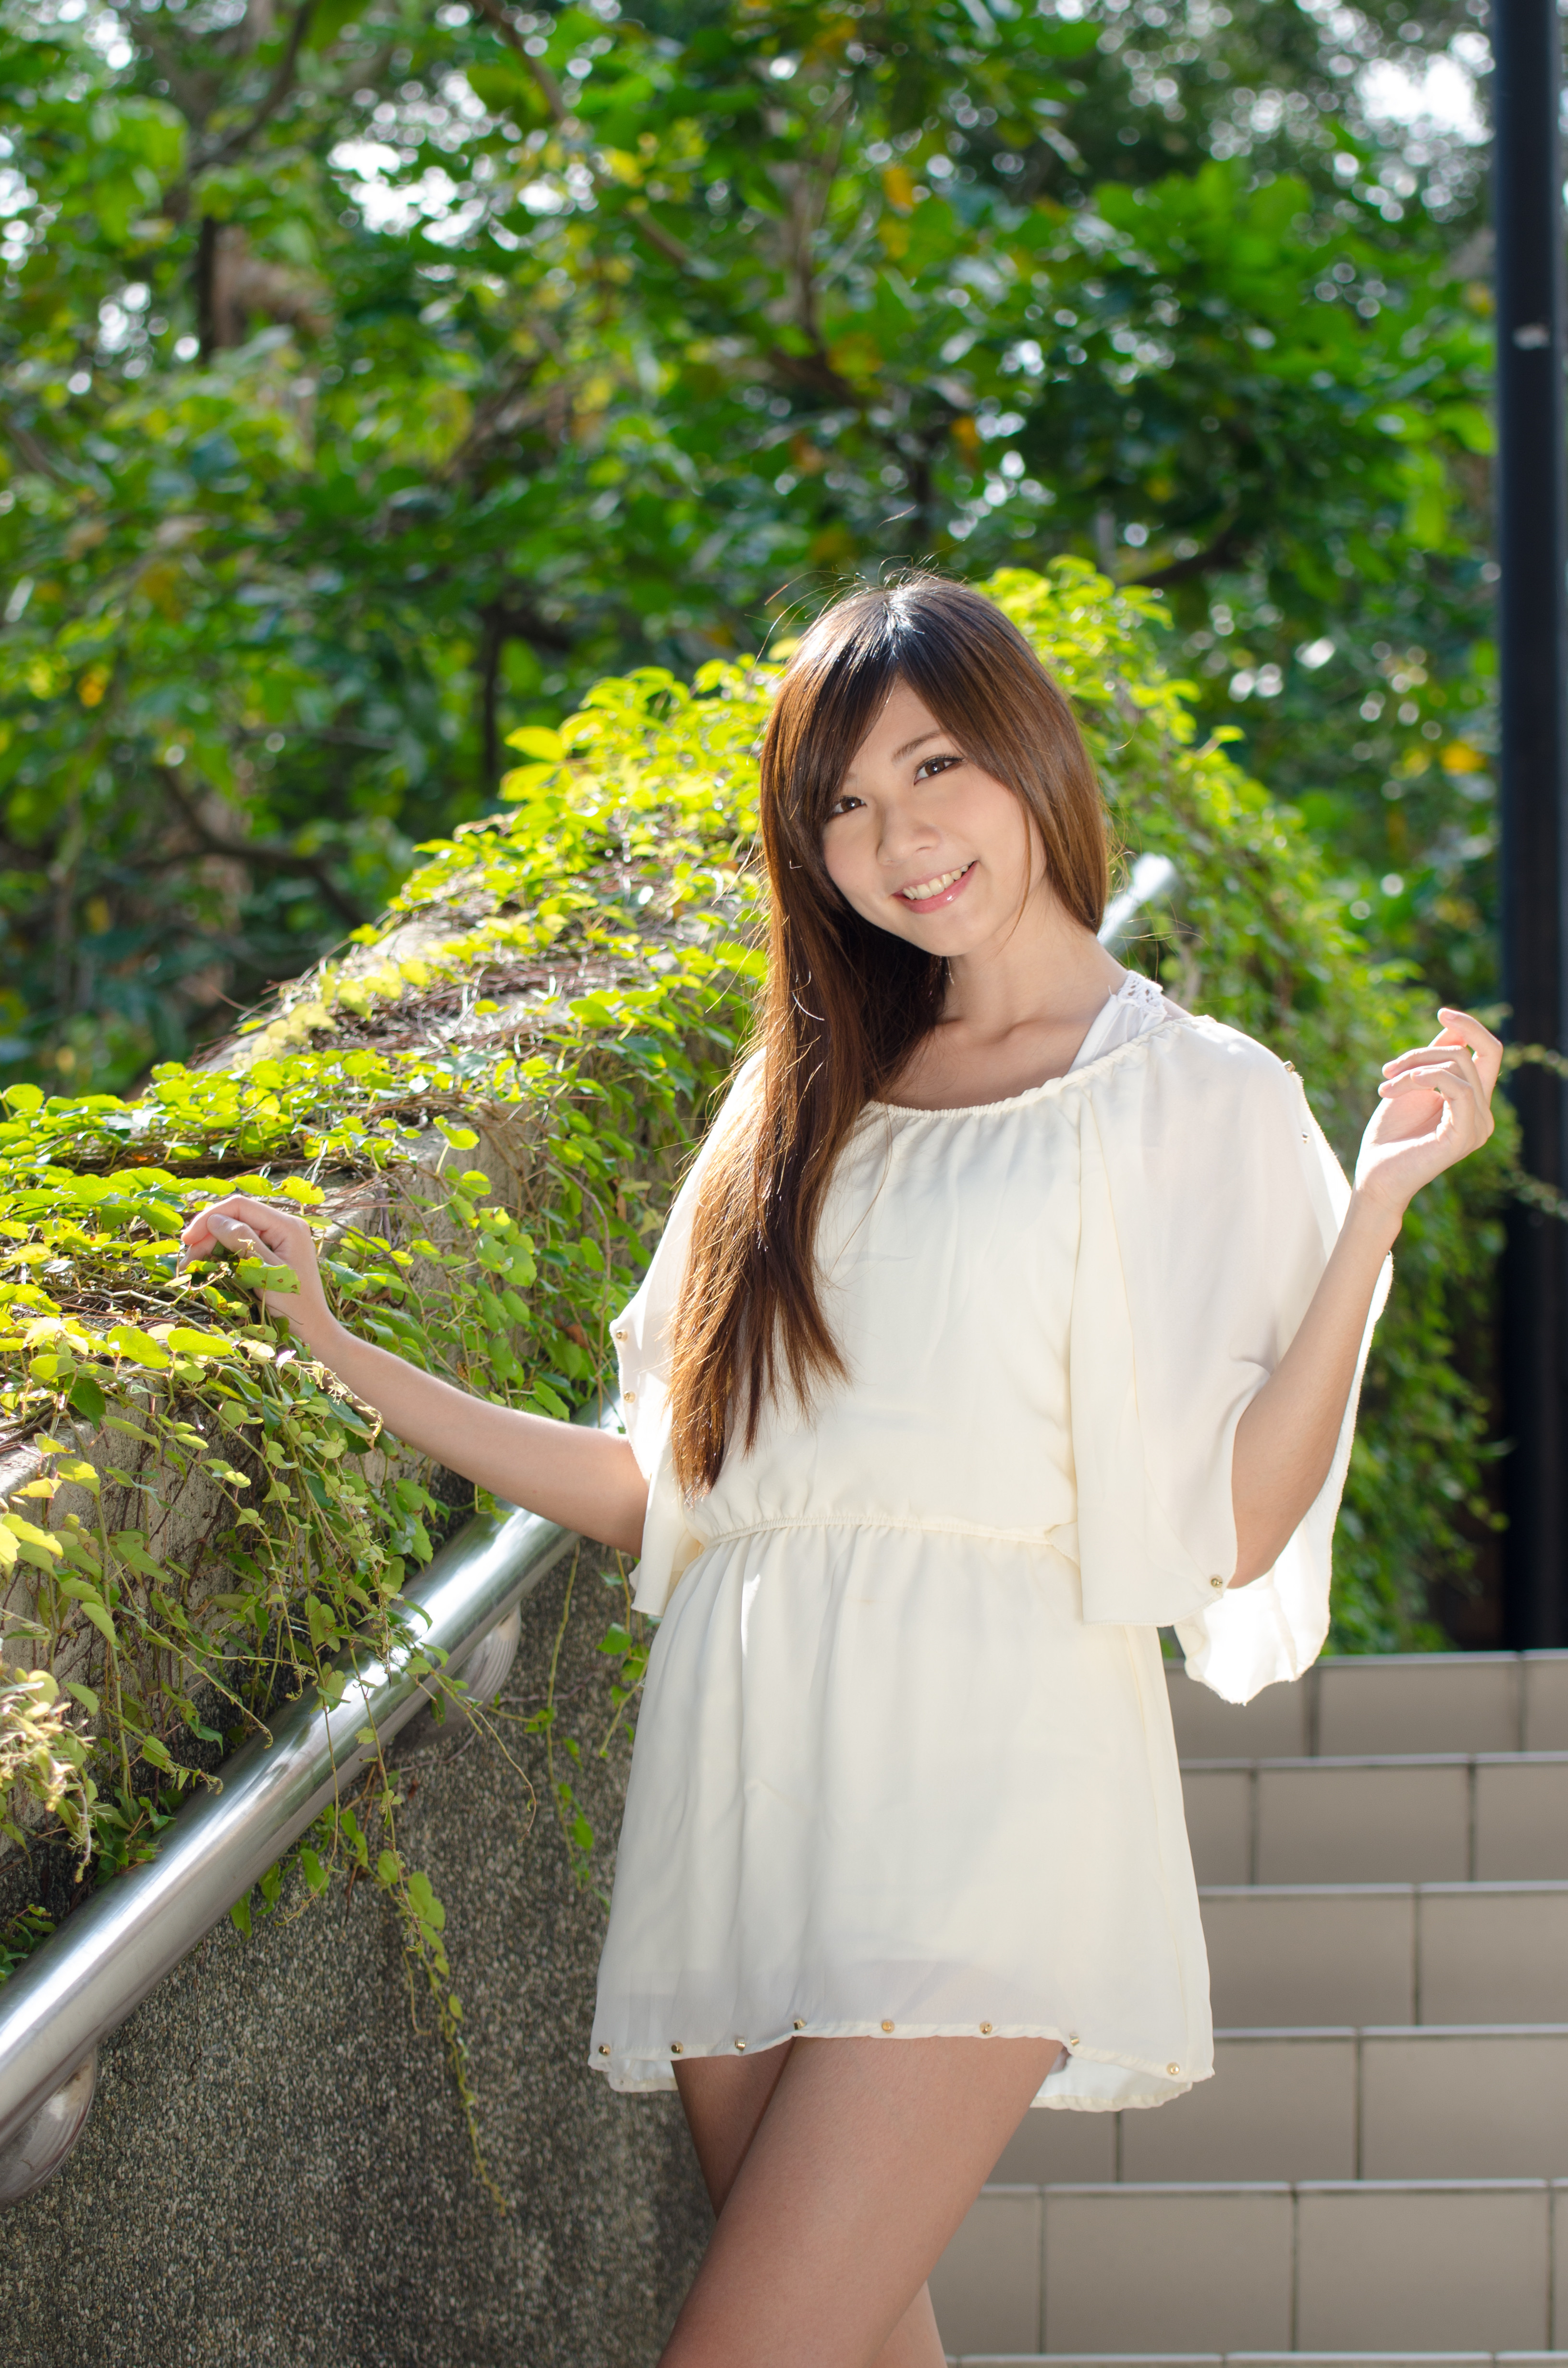 Asian Model Women Brunette Smiling Stairs Portrait Display Women Outdoors Robin Huang 3264x4928